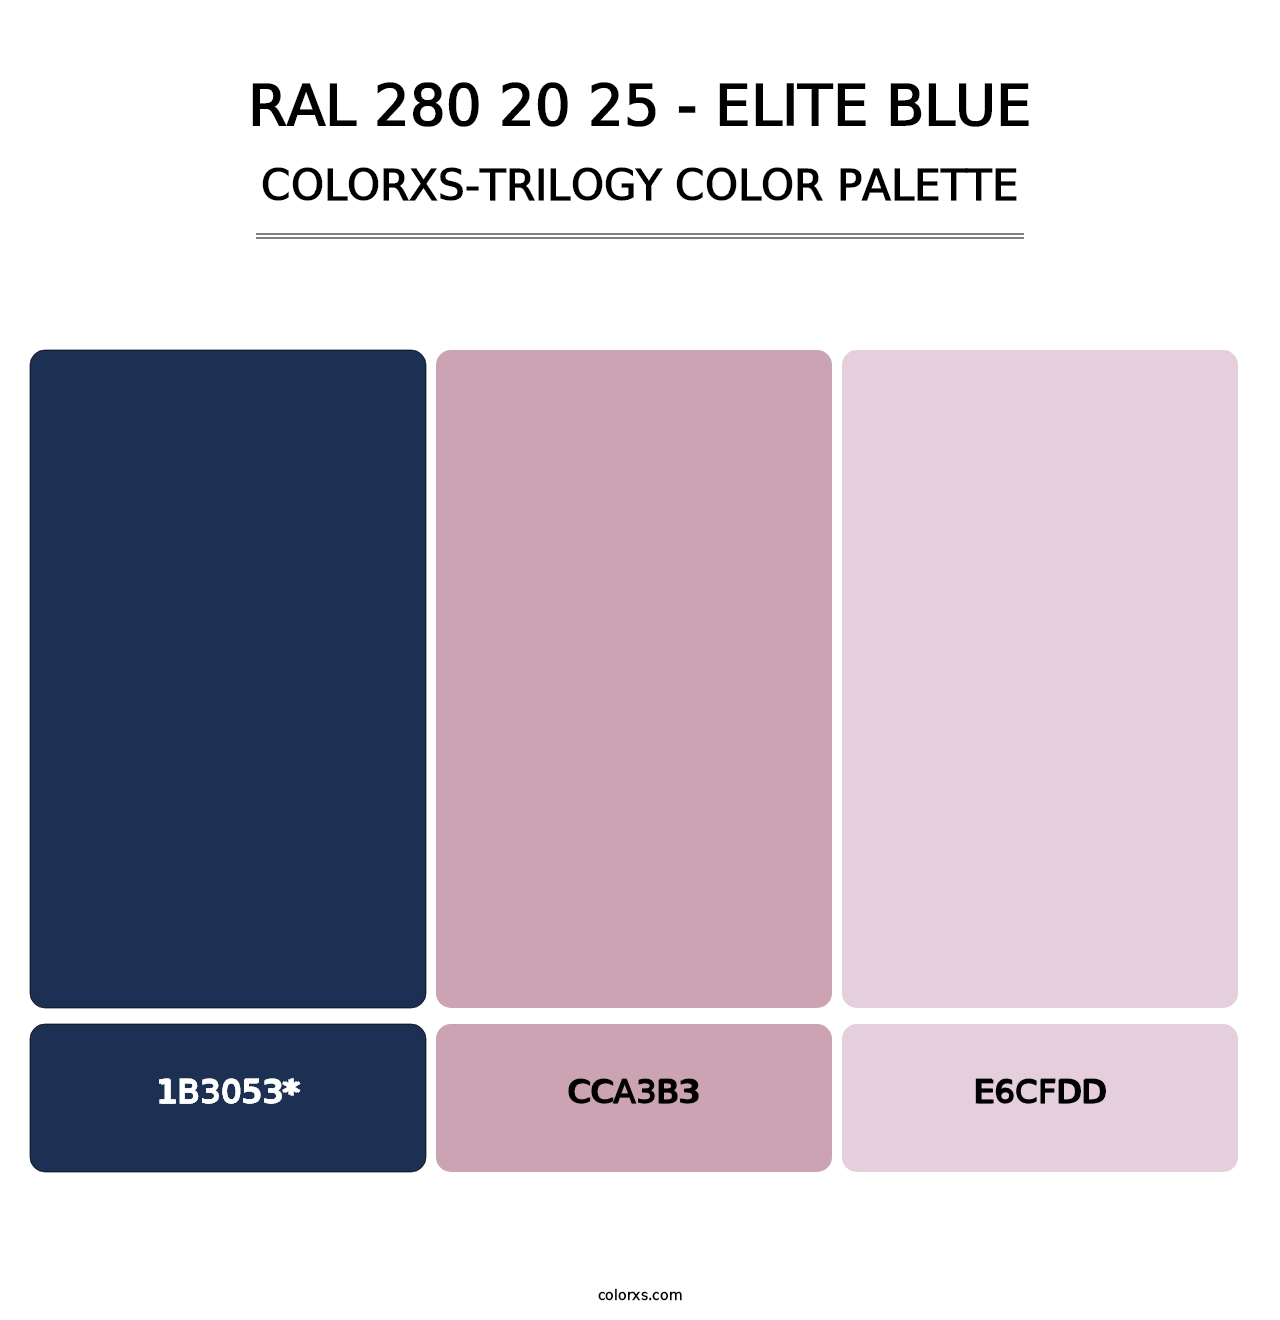 RAL 280 20 25 - Elite Blue - Colorxs Trilogy Palette